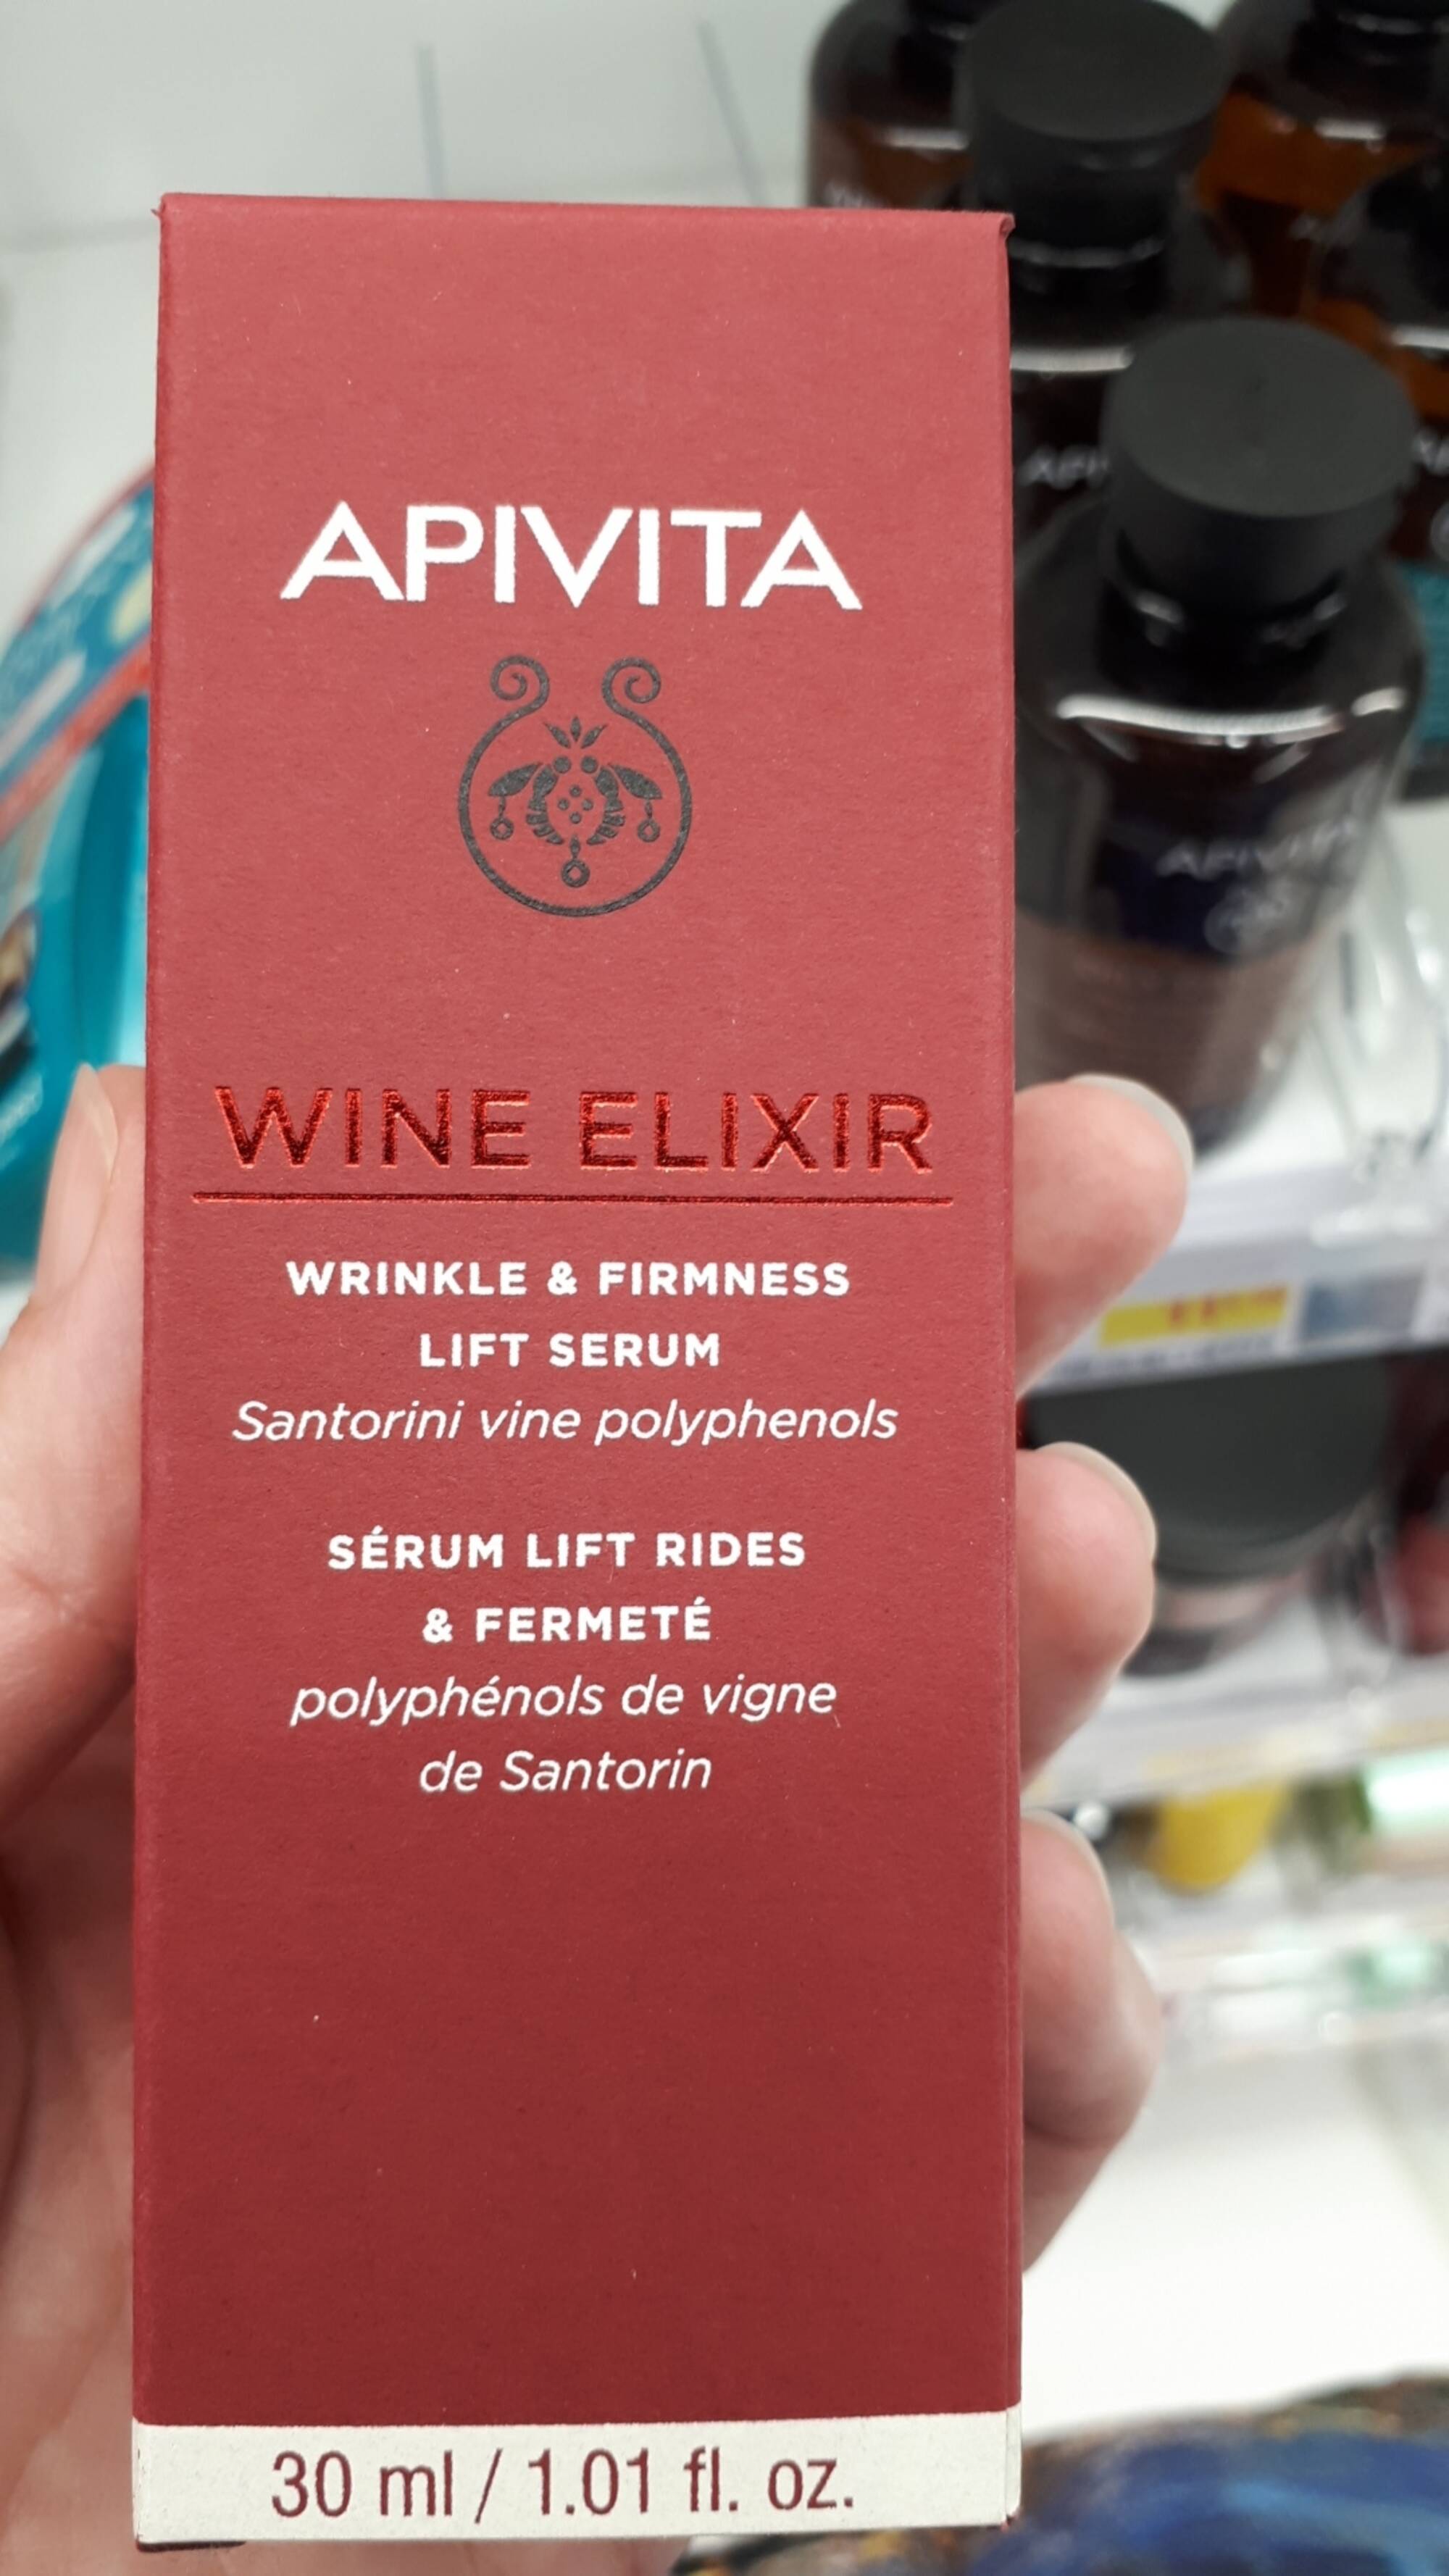 APIVITA - Wine elixir - Sérum lift rides & fermeté